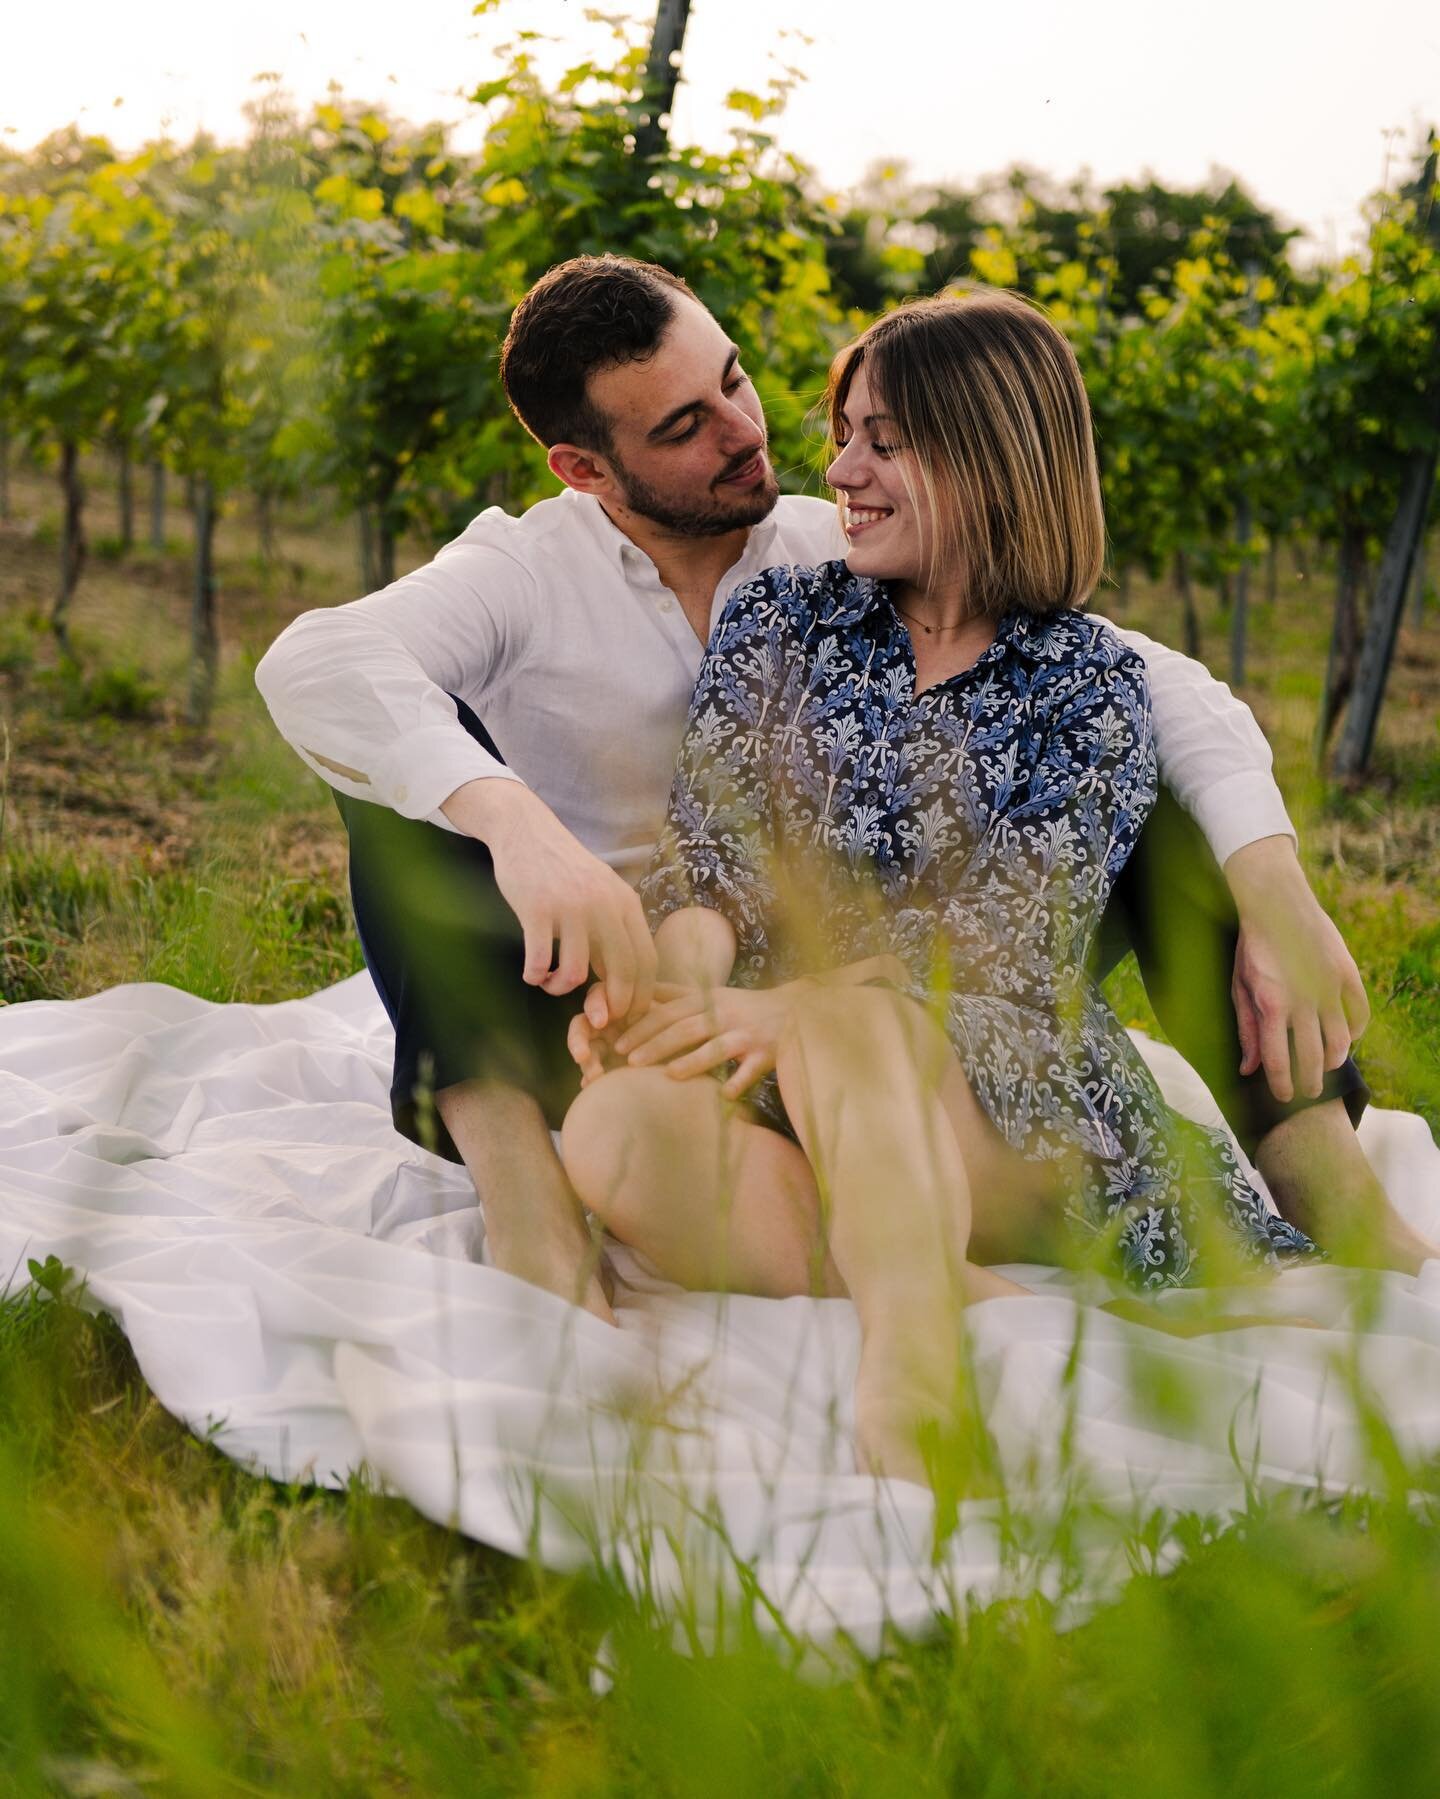 Into the vineyard 🤍
.
.
.
.
#veronaphotographer #vineyard #couplesphotography #cinematography #inlovecouples #mydiarylife